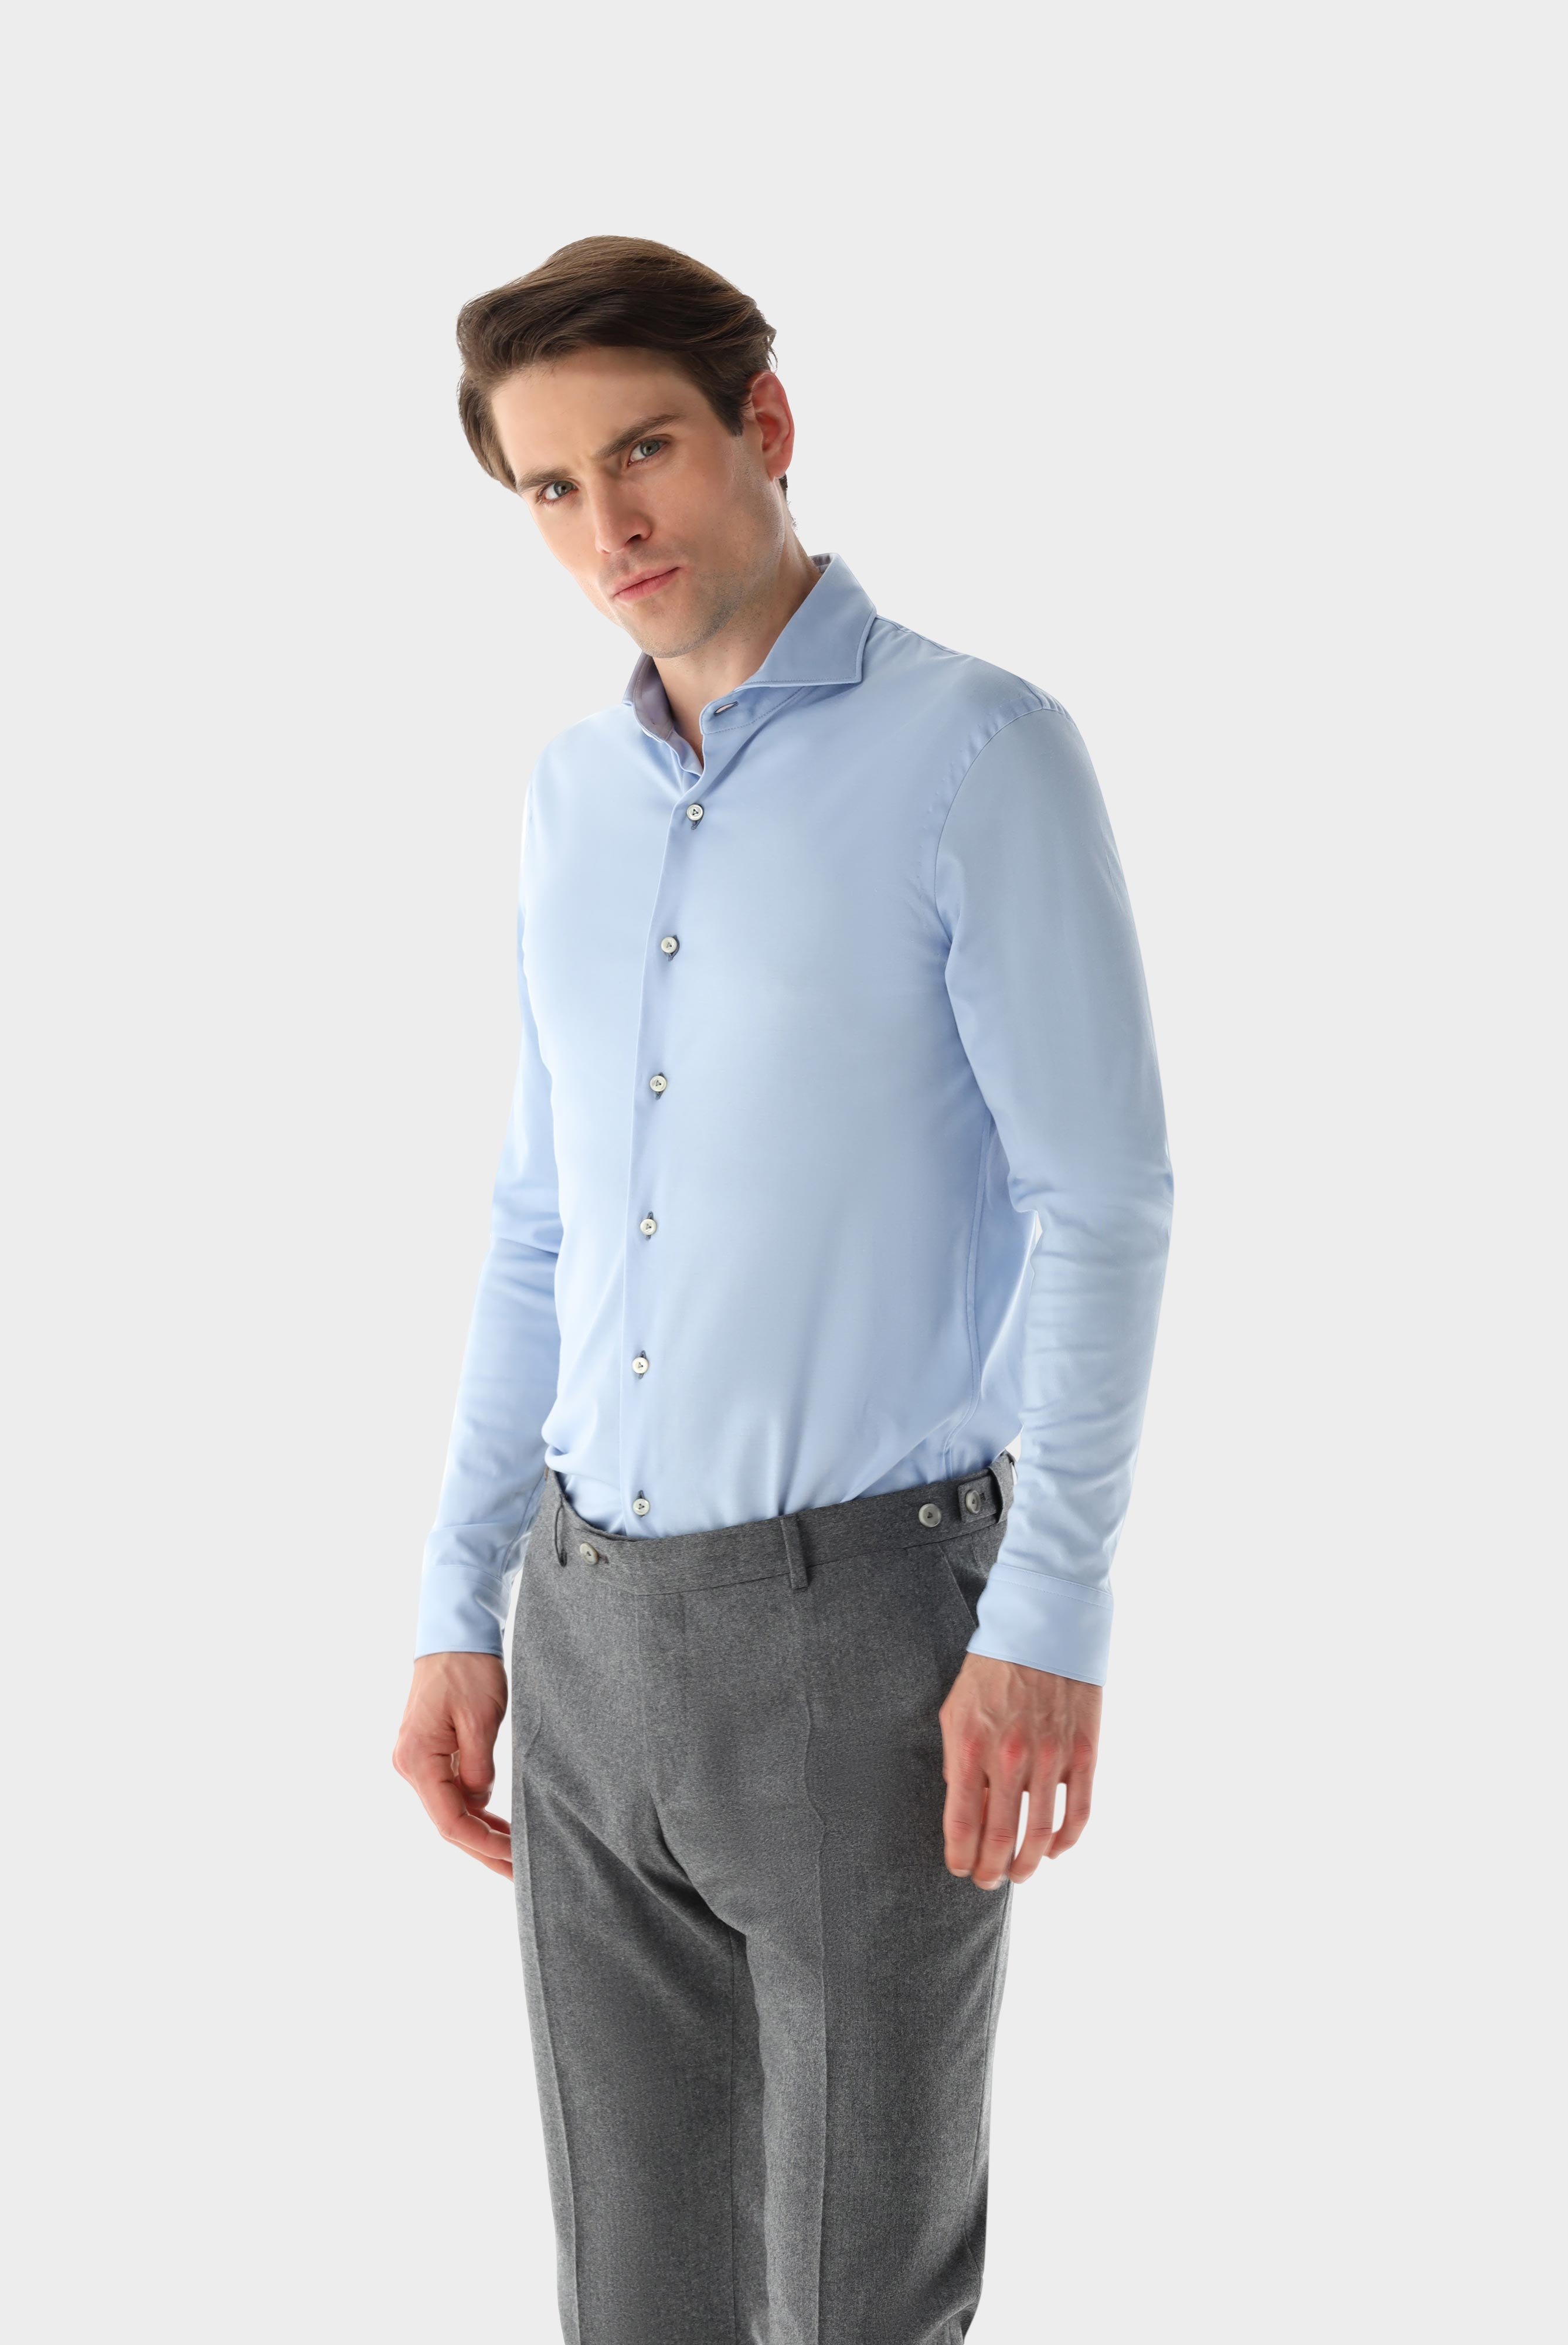 Casual Hemden+Jersey Hemd aus Schweizer Baumwolle Tailor Fit+20.1683.UC.180031.720.S